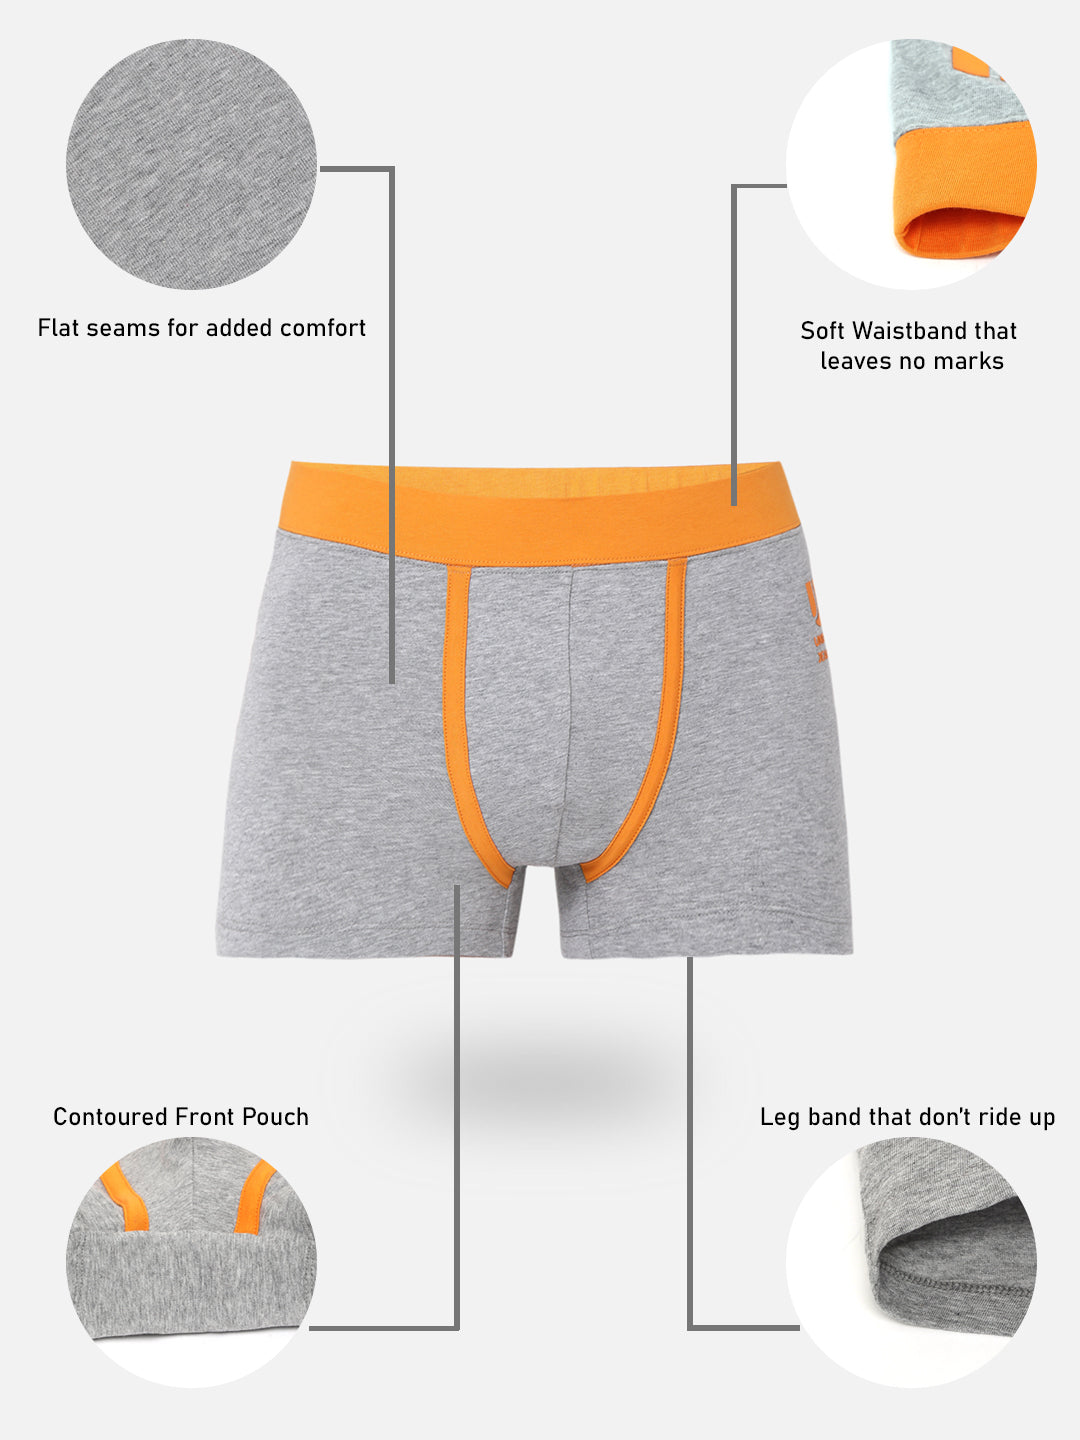 Men Premium Cotton Blend Grey Trunk- UnderJeans by Spykar